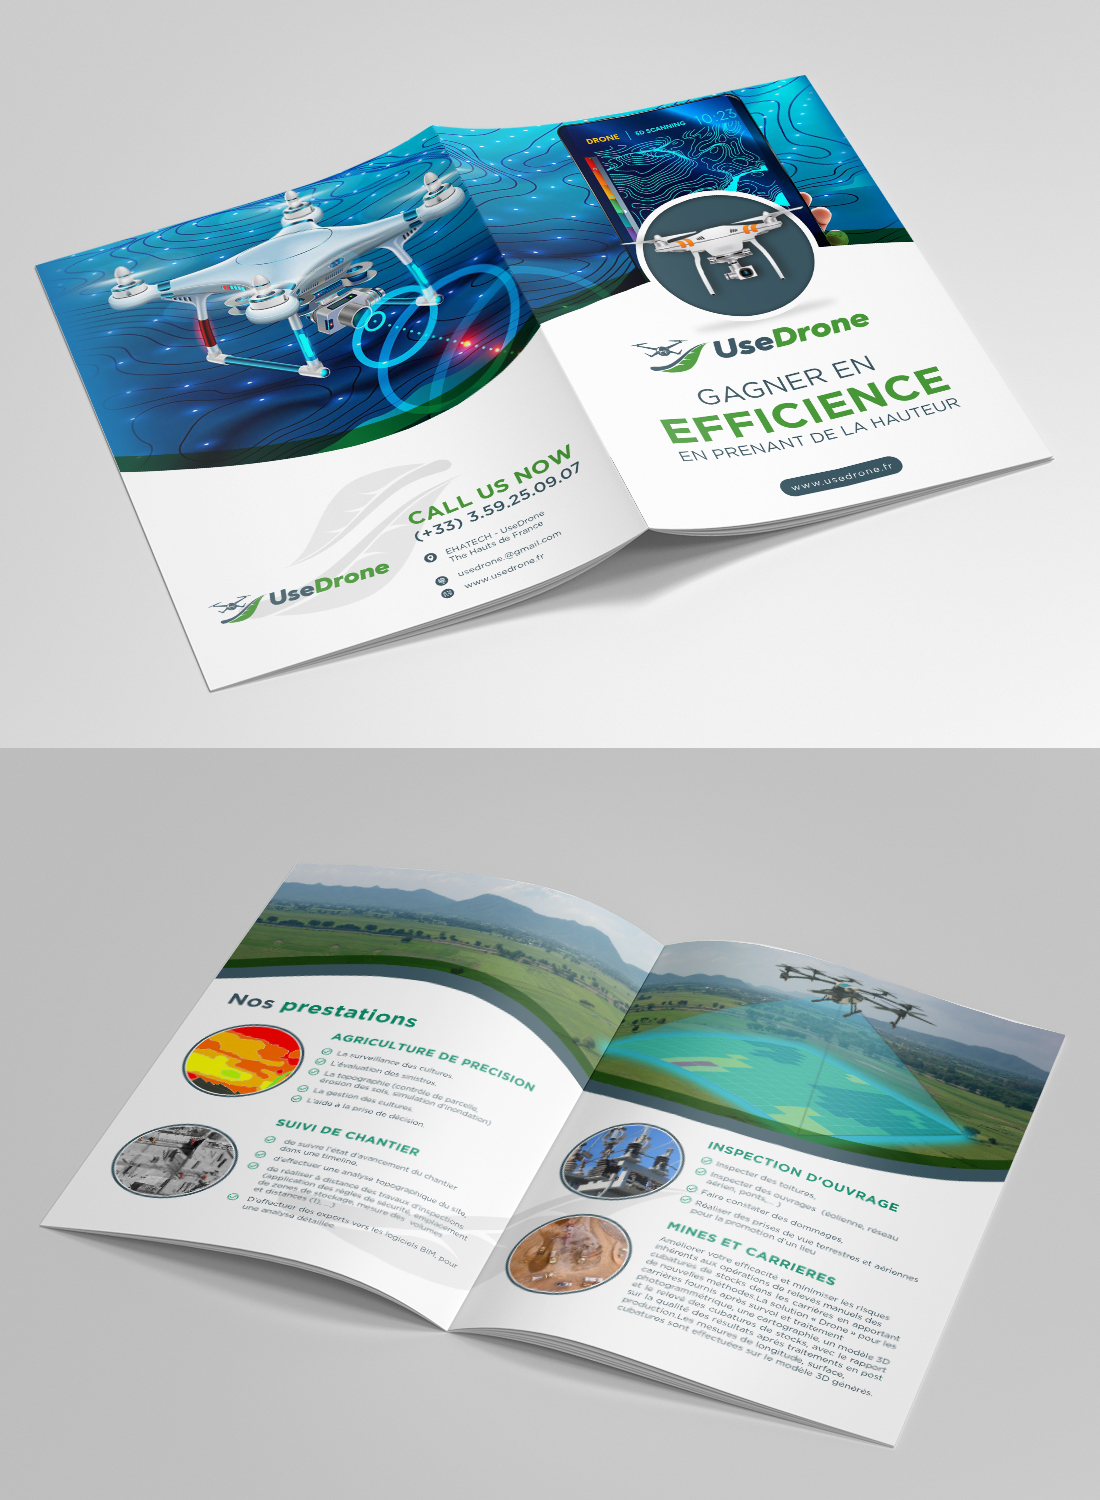 Brochure Designs for Drone